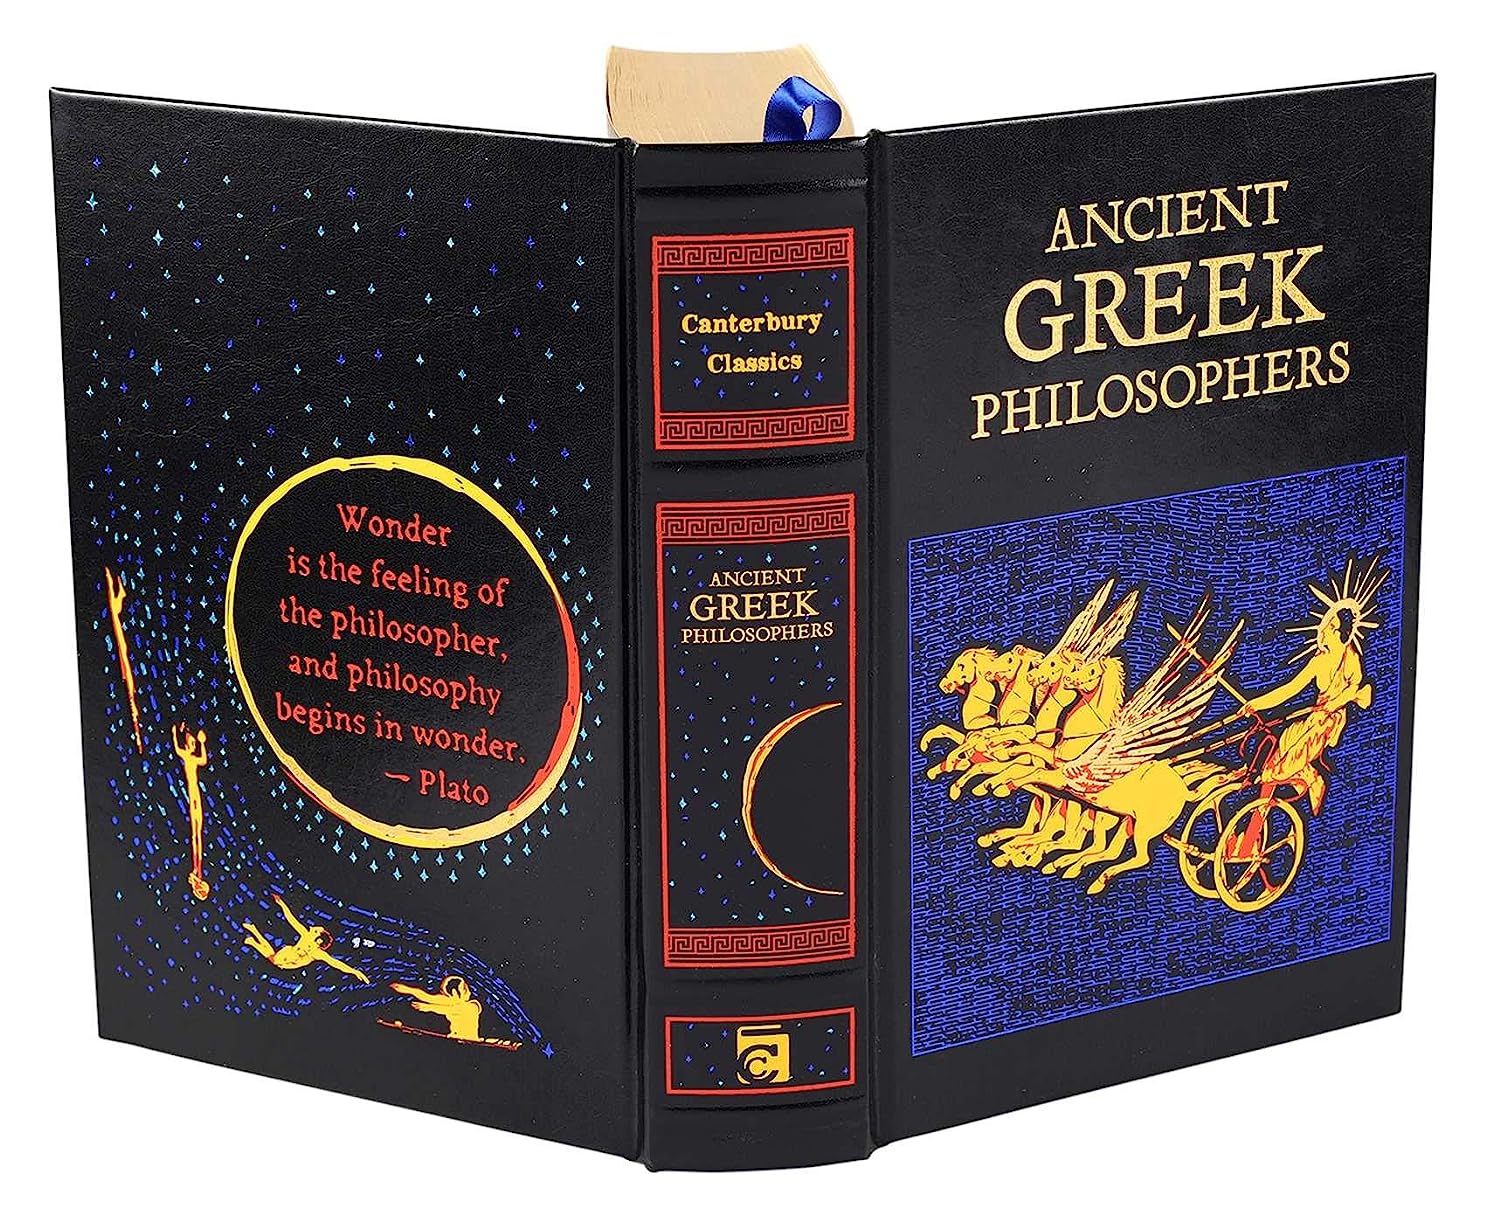 Ancient Greek Philosophers (Leather-bound Classics)